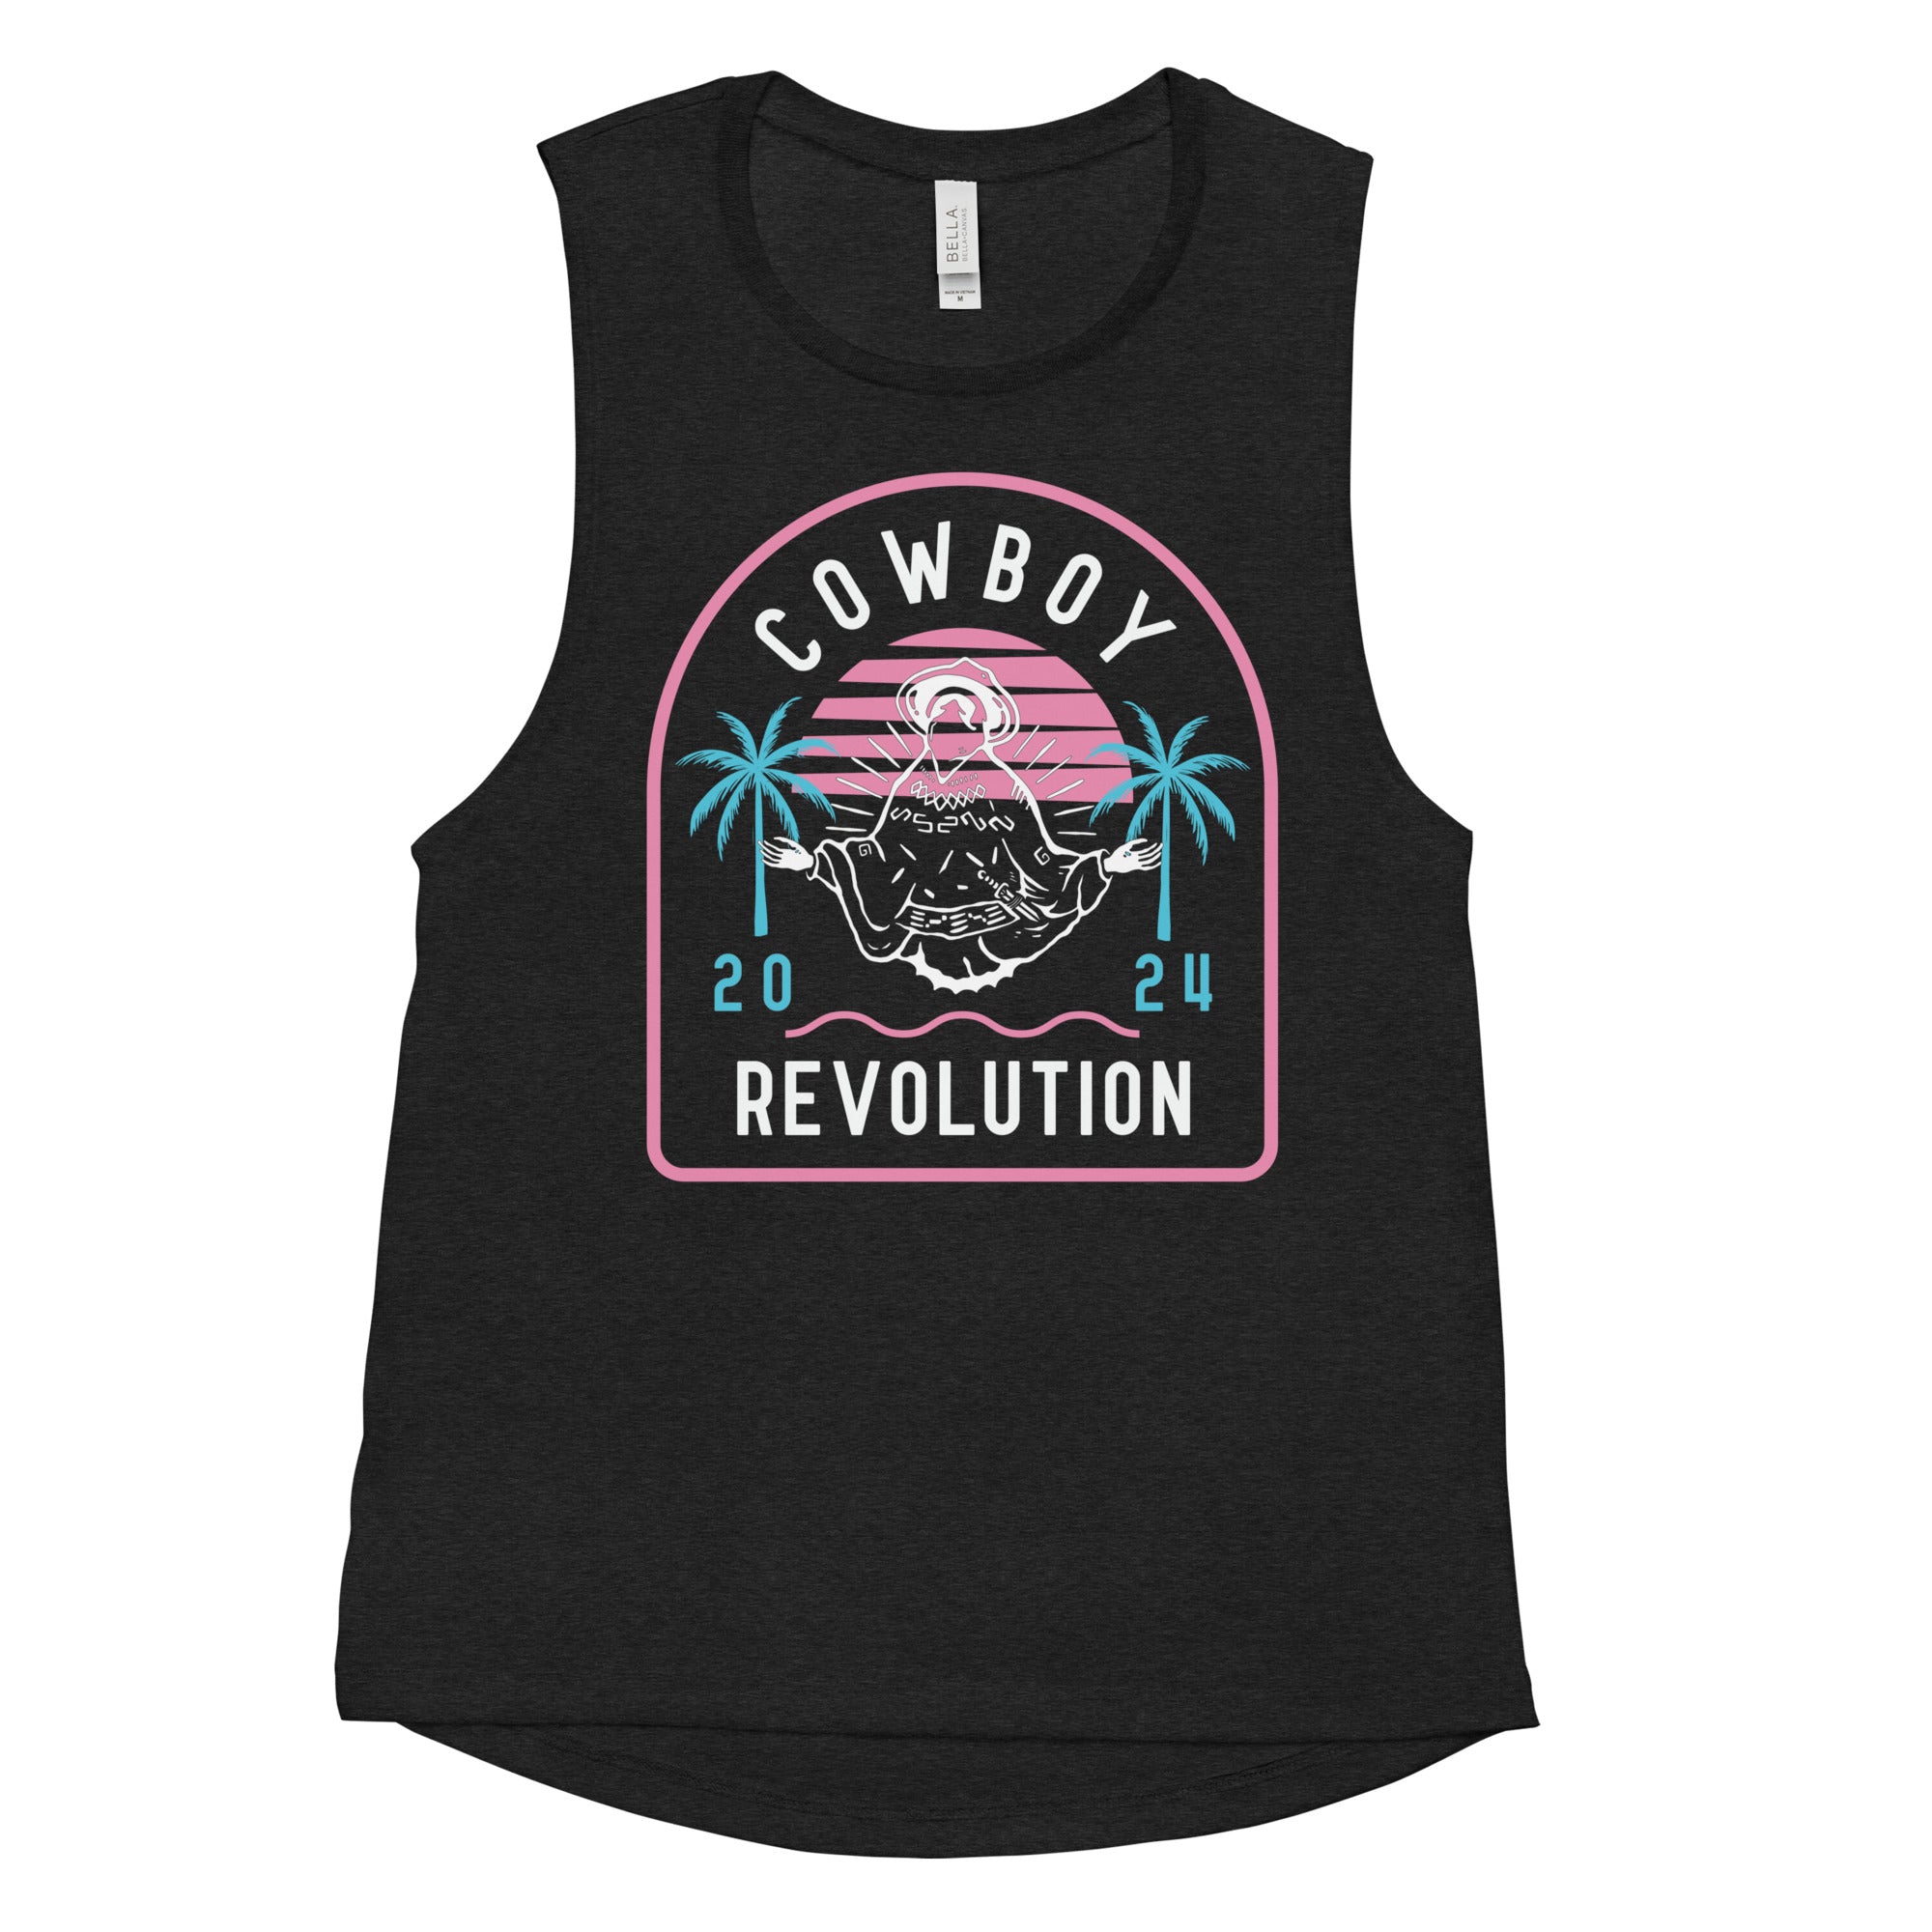 "Santo Del Sol" Cowboy Revolution Women's Muscle Tank